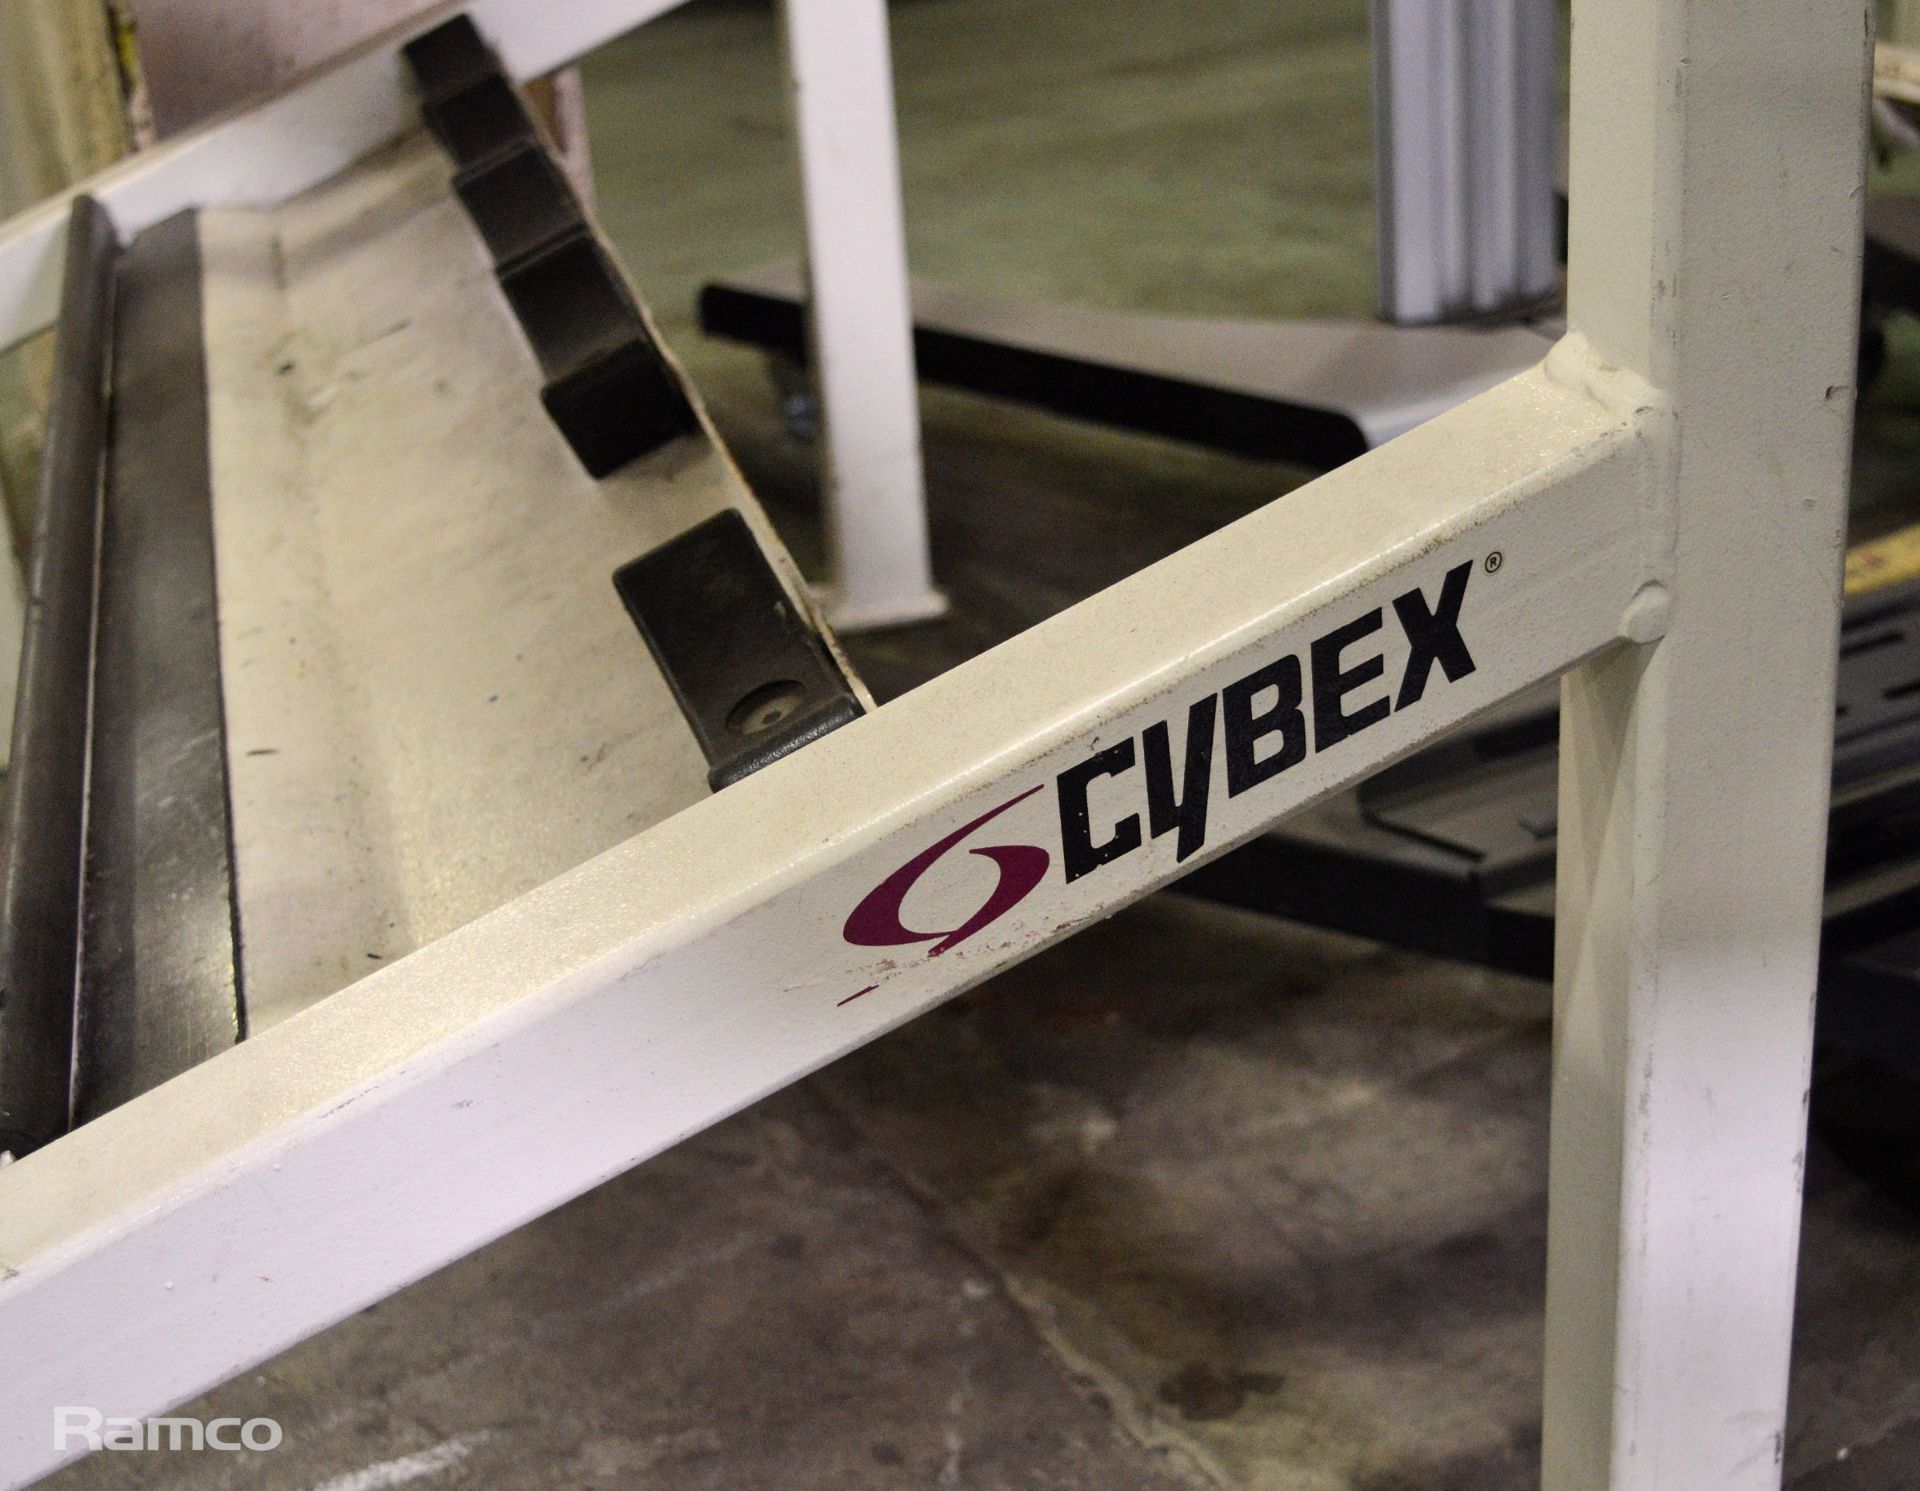 Cybex 5315-9 dumbell rack - Image 3 of 3